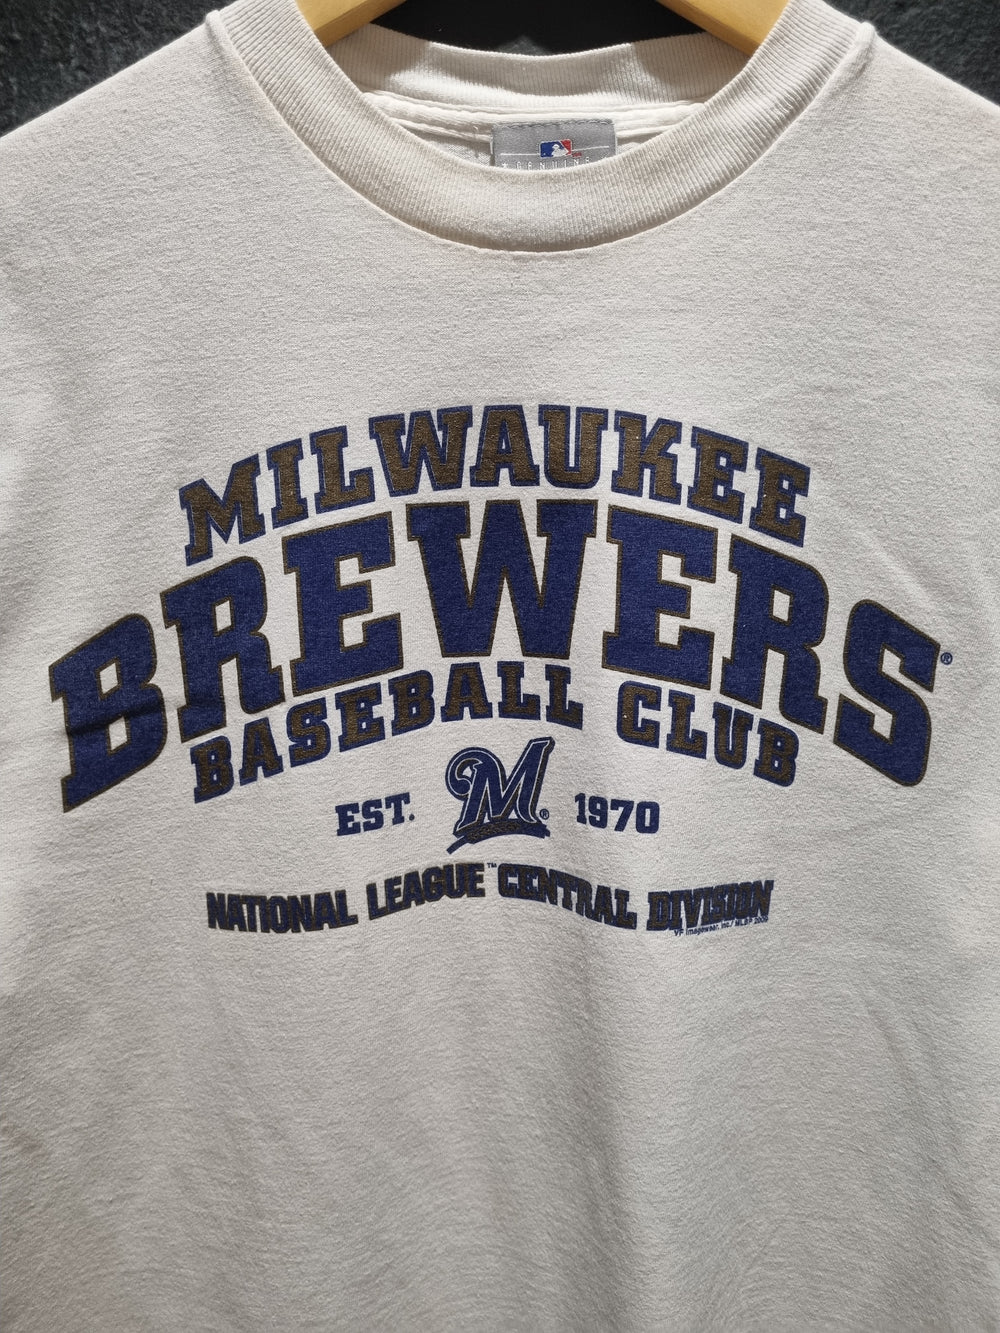 Milwaukee Brewers Baseball Club 2009 Medium